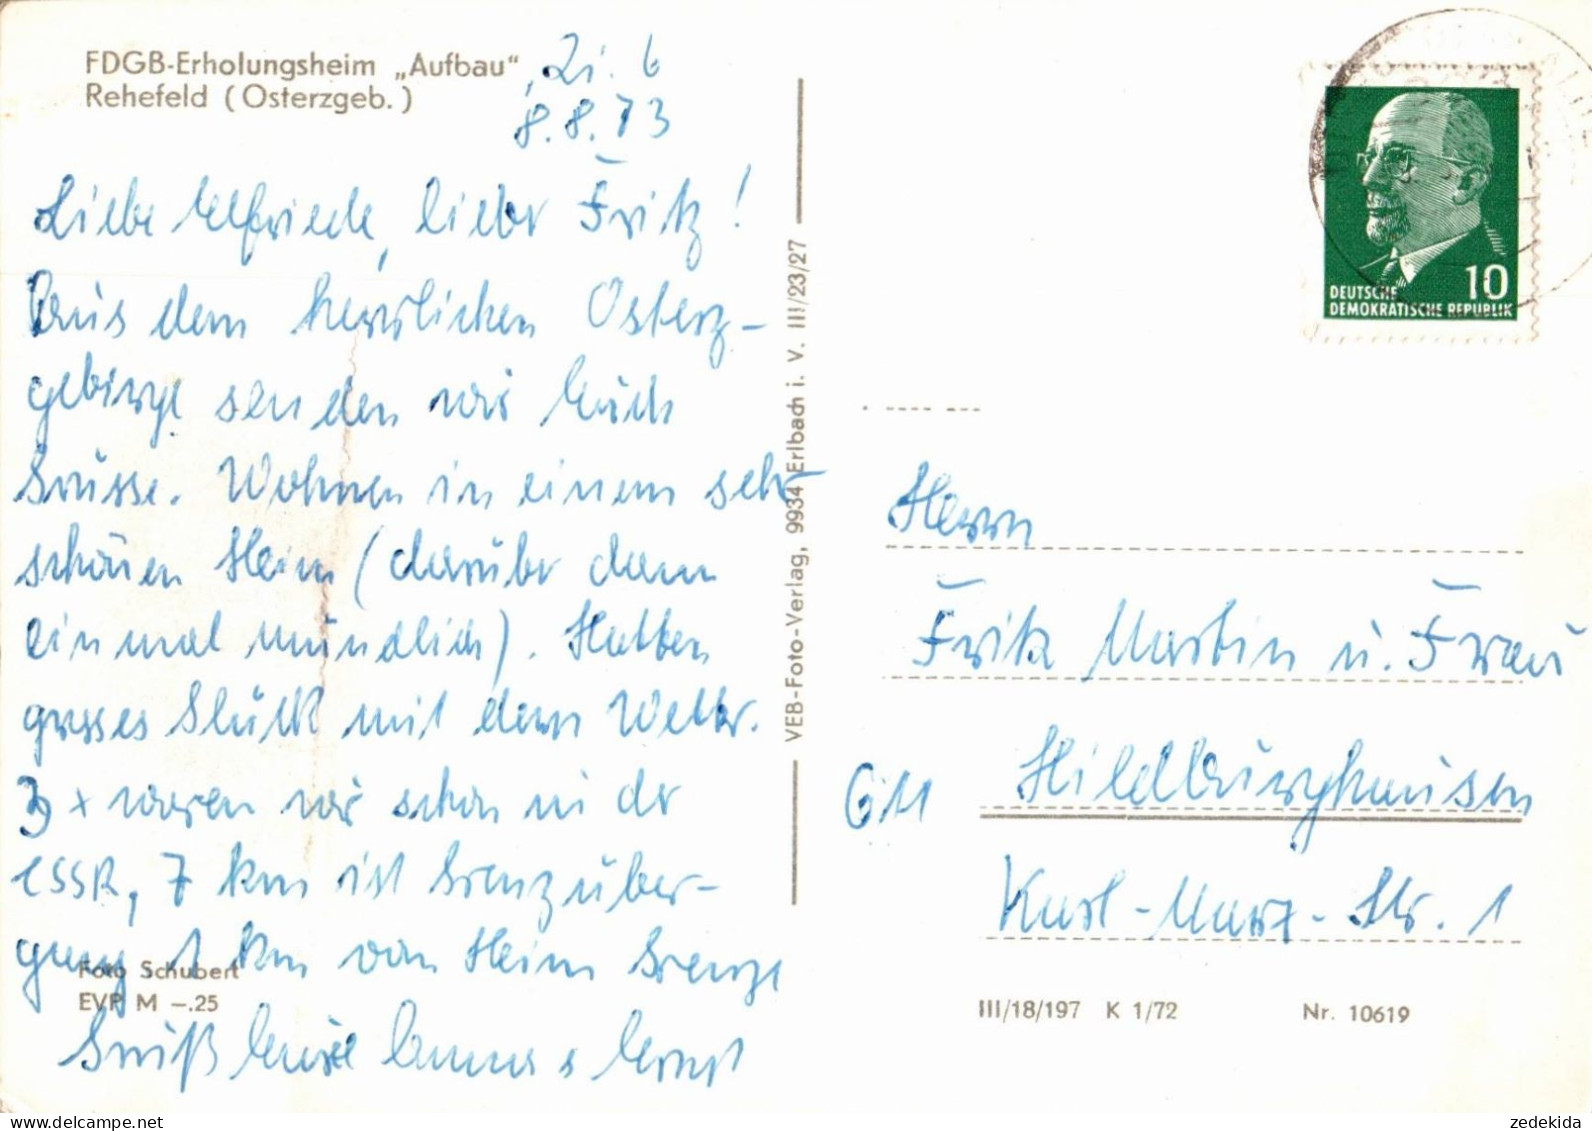 H0457 - Rehefeld - FDGB Heim Aufbau - Verlag Erlbach - Rehefeld